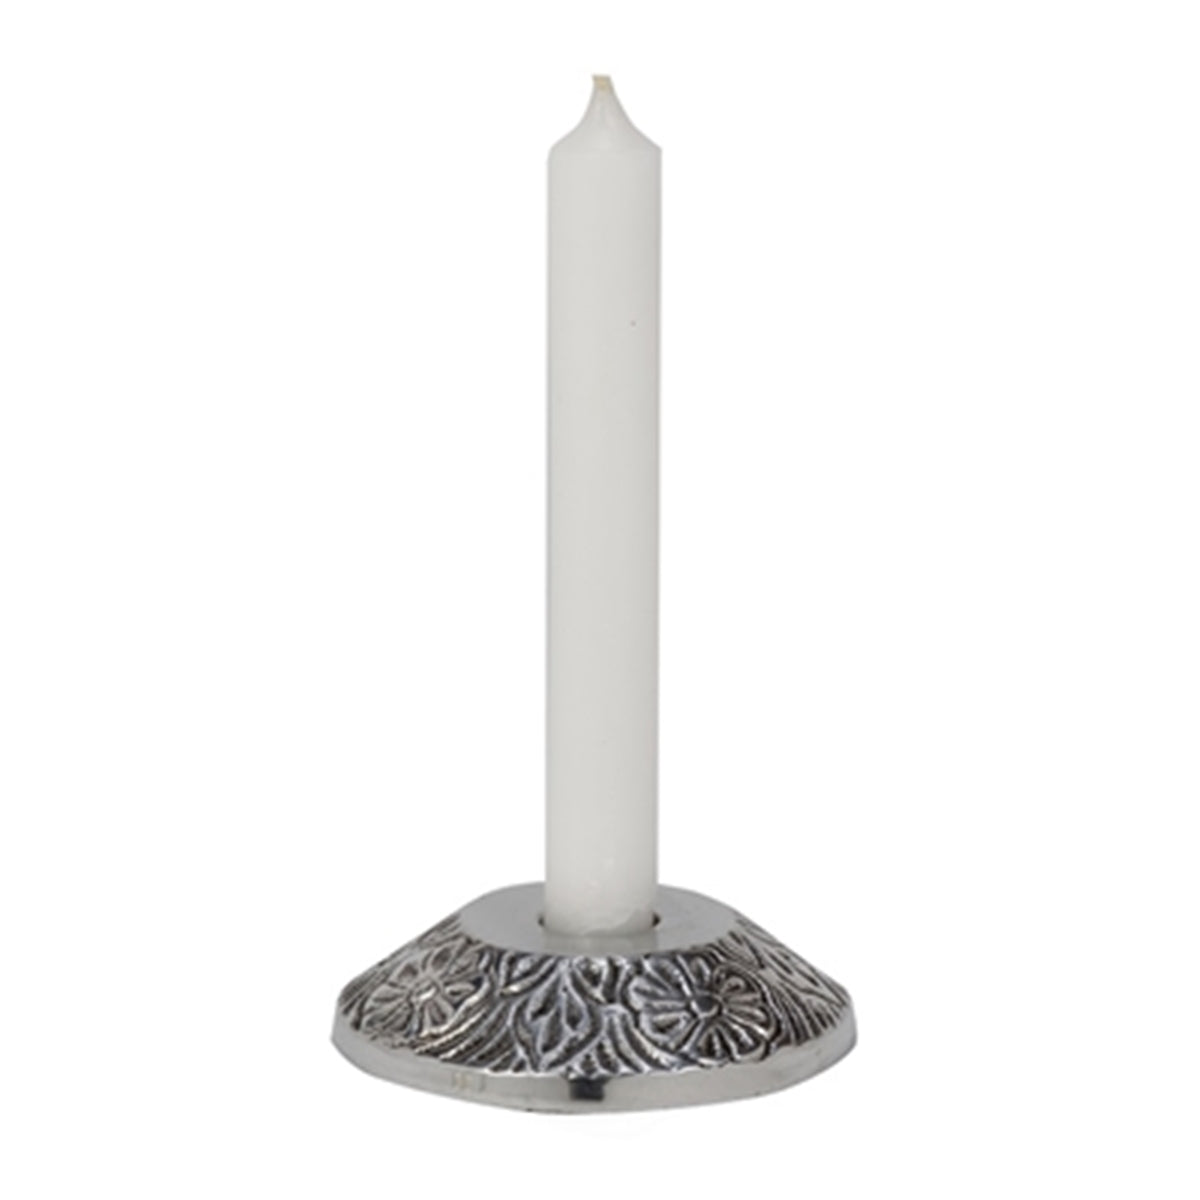 Flower candle holder - Nickel